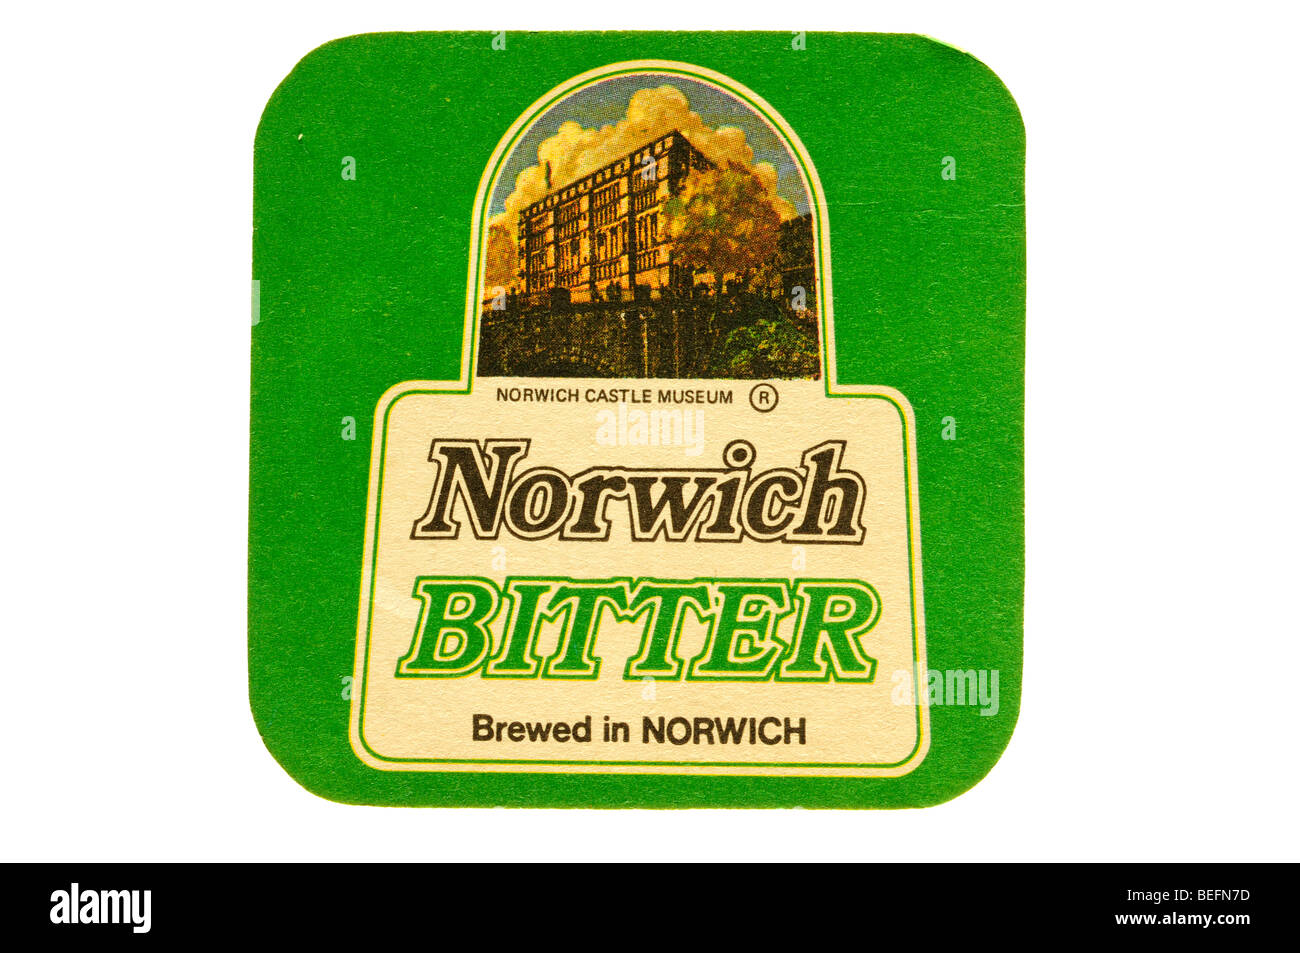 Norwich brewes amargo en Norwich norwich Castle Museum beer mat Foto de stock